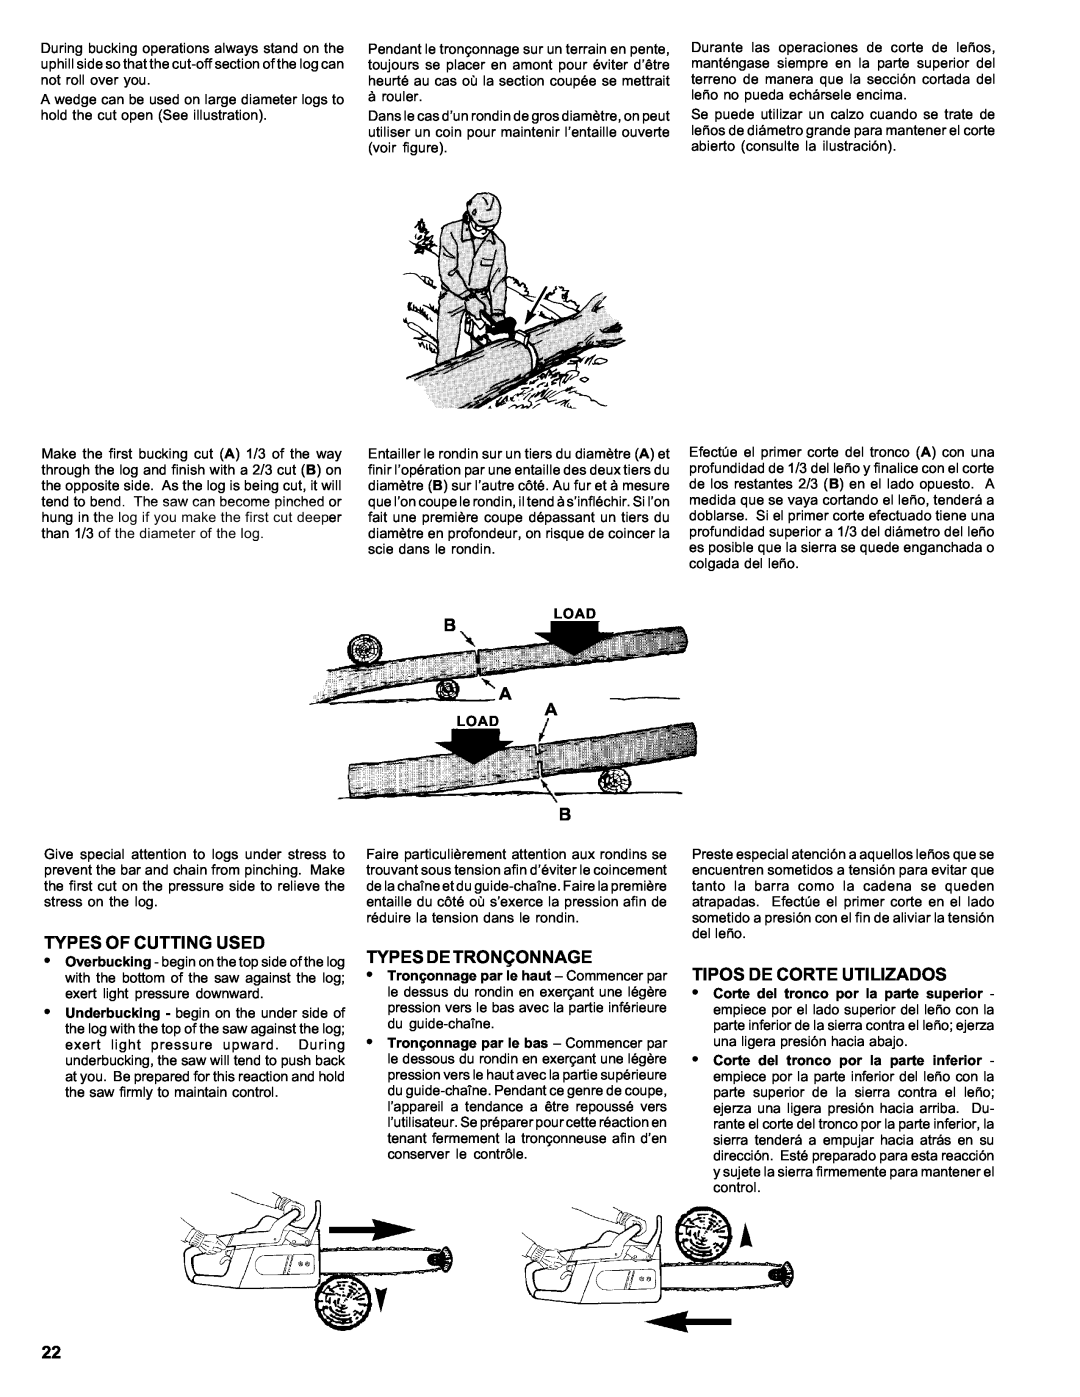 Homelite ut 10910 manual B A A, Types Of Cutting Used, Typesdetronçonnage, Tipos De Corte Utilizados 